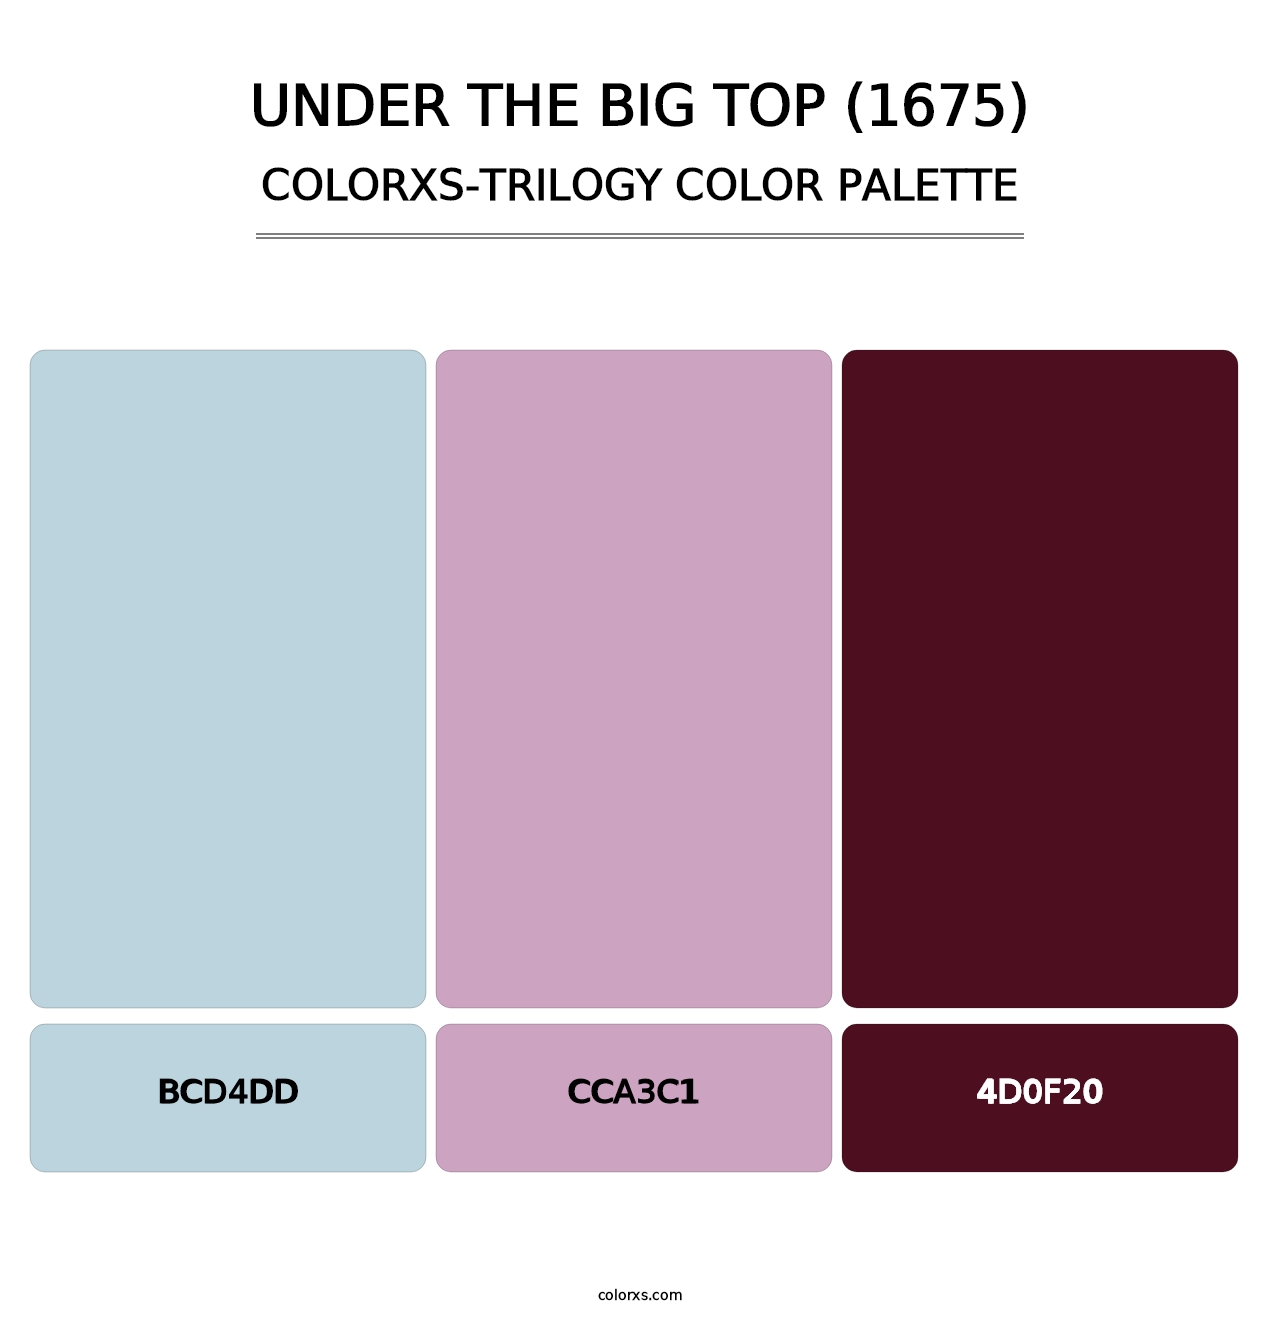 Under the Big Top (1675) - Colorxs Trilogy Palette